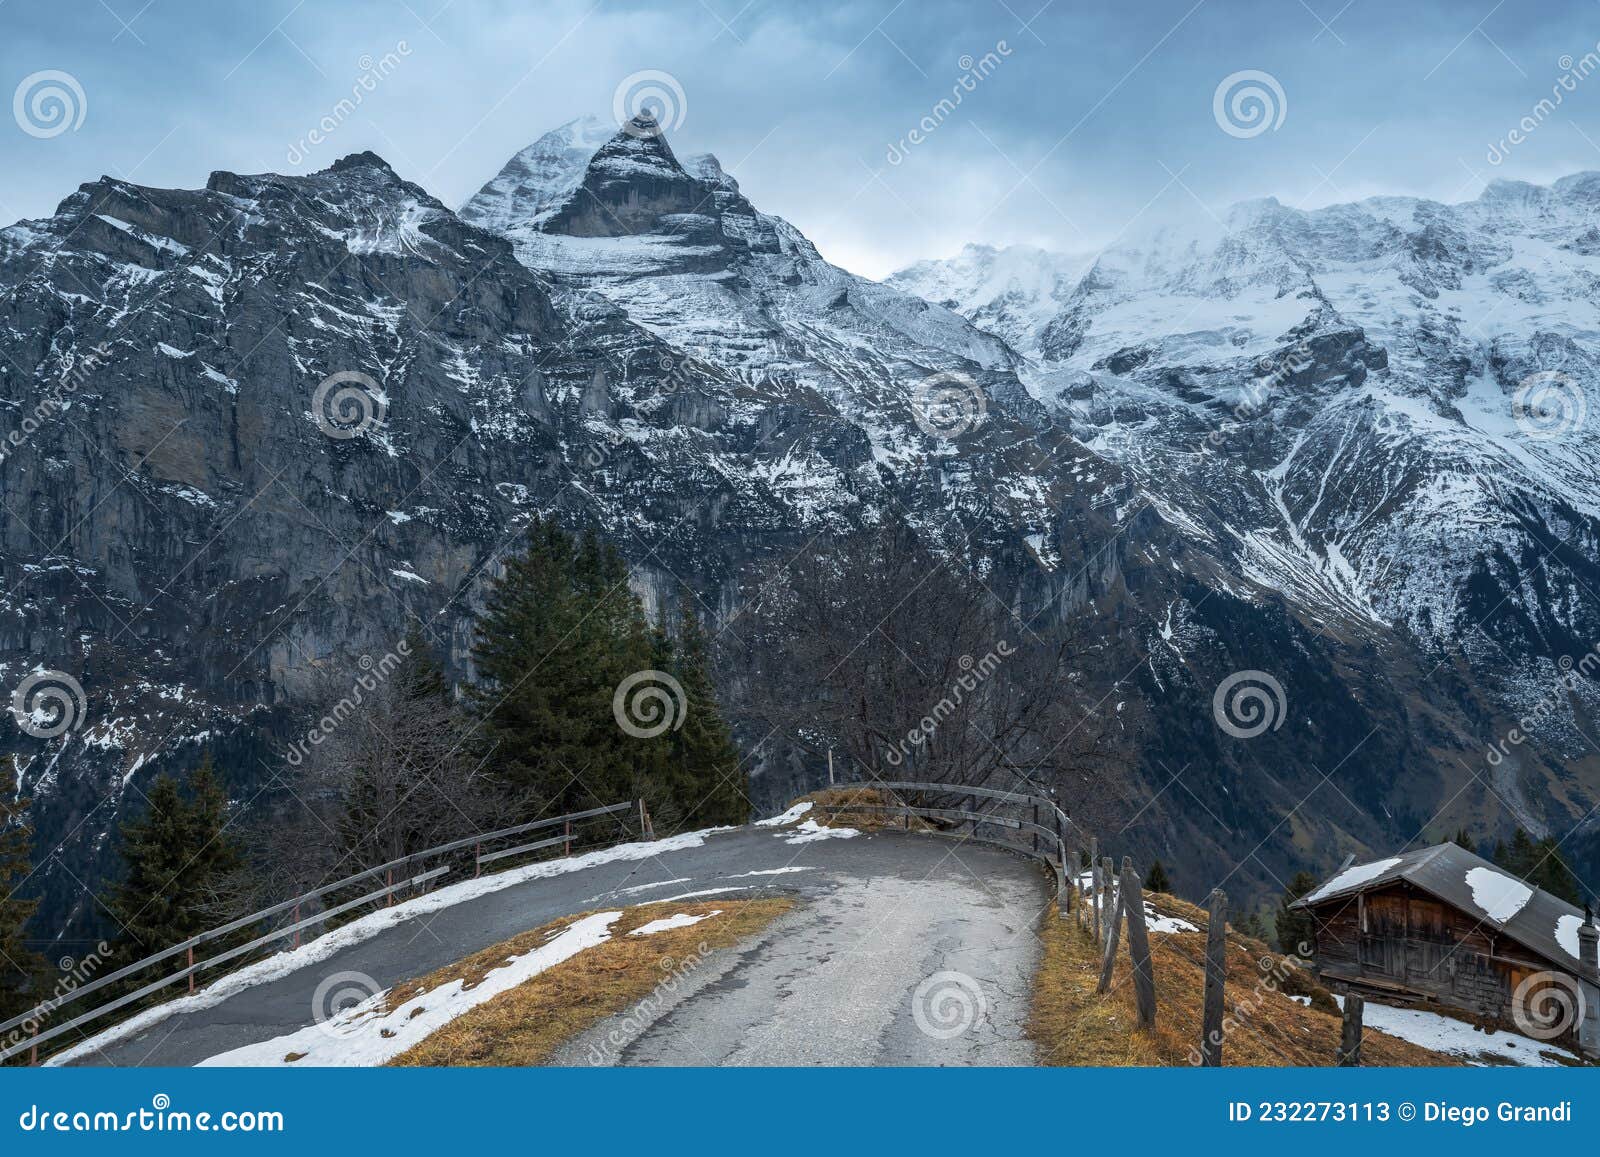 road in murren with jungfrau mountain on background - silberhorn and schwarz monch parts - murren, switzerland